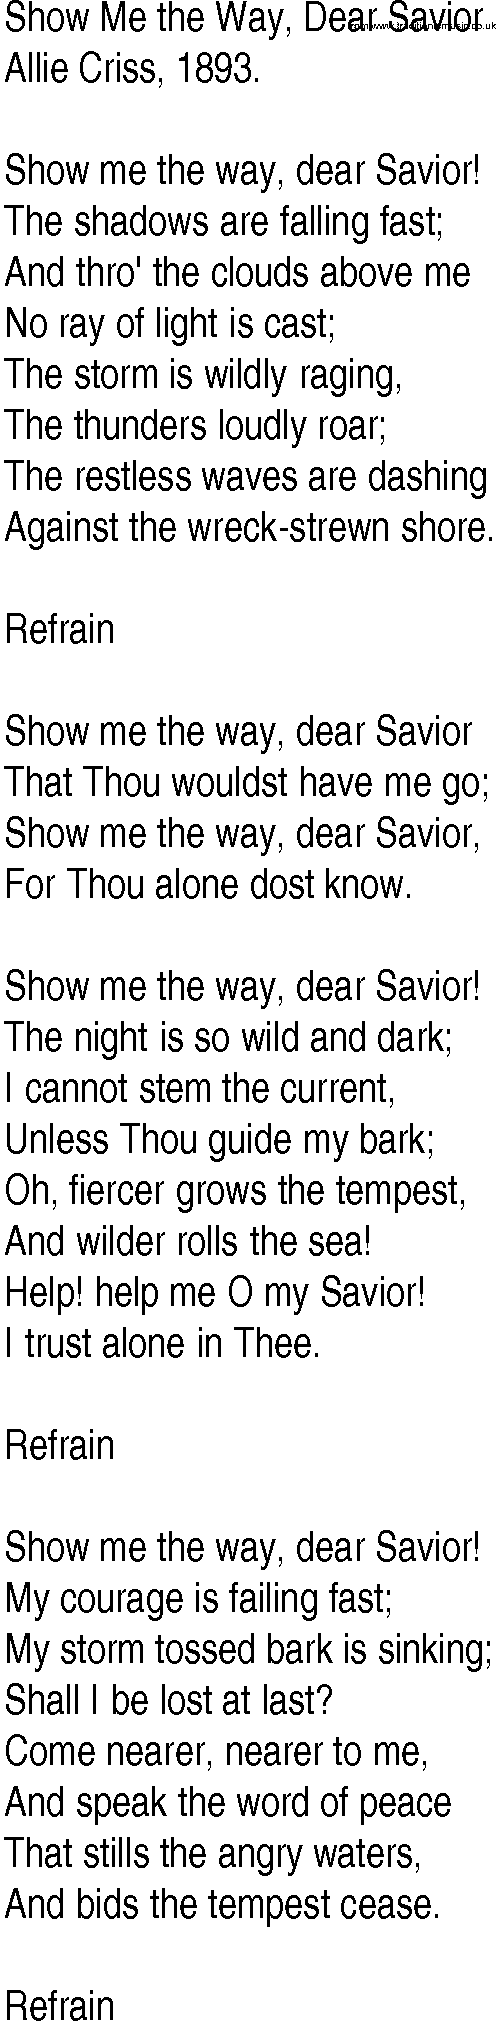 Hymn and Gospel Song: Show Me the Way, Dear Savior by Allie Criss lyrics